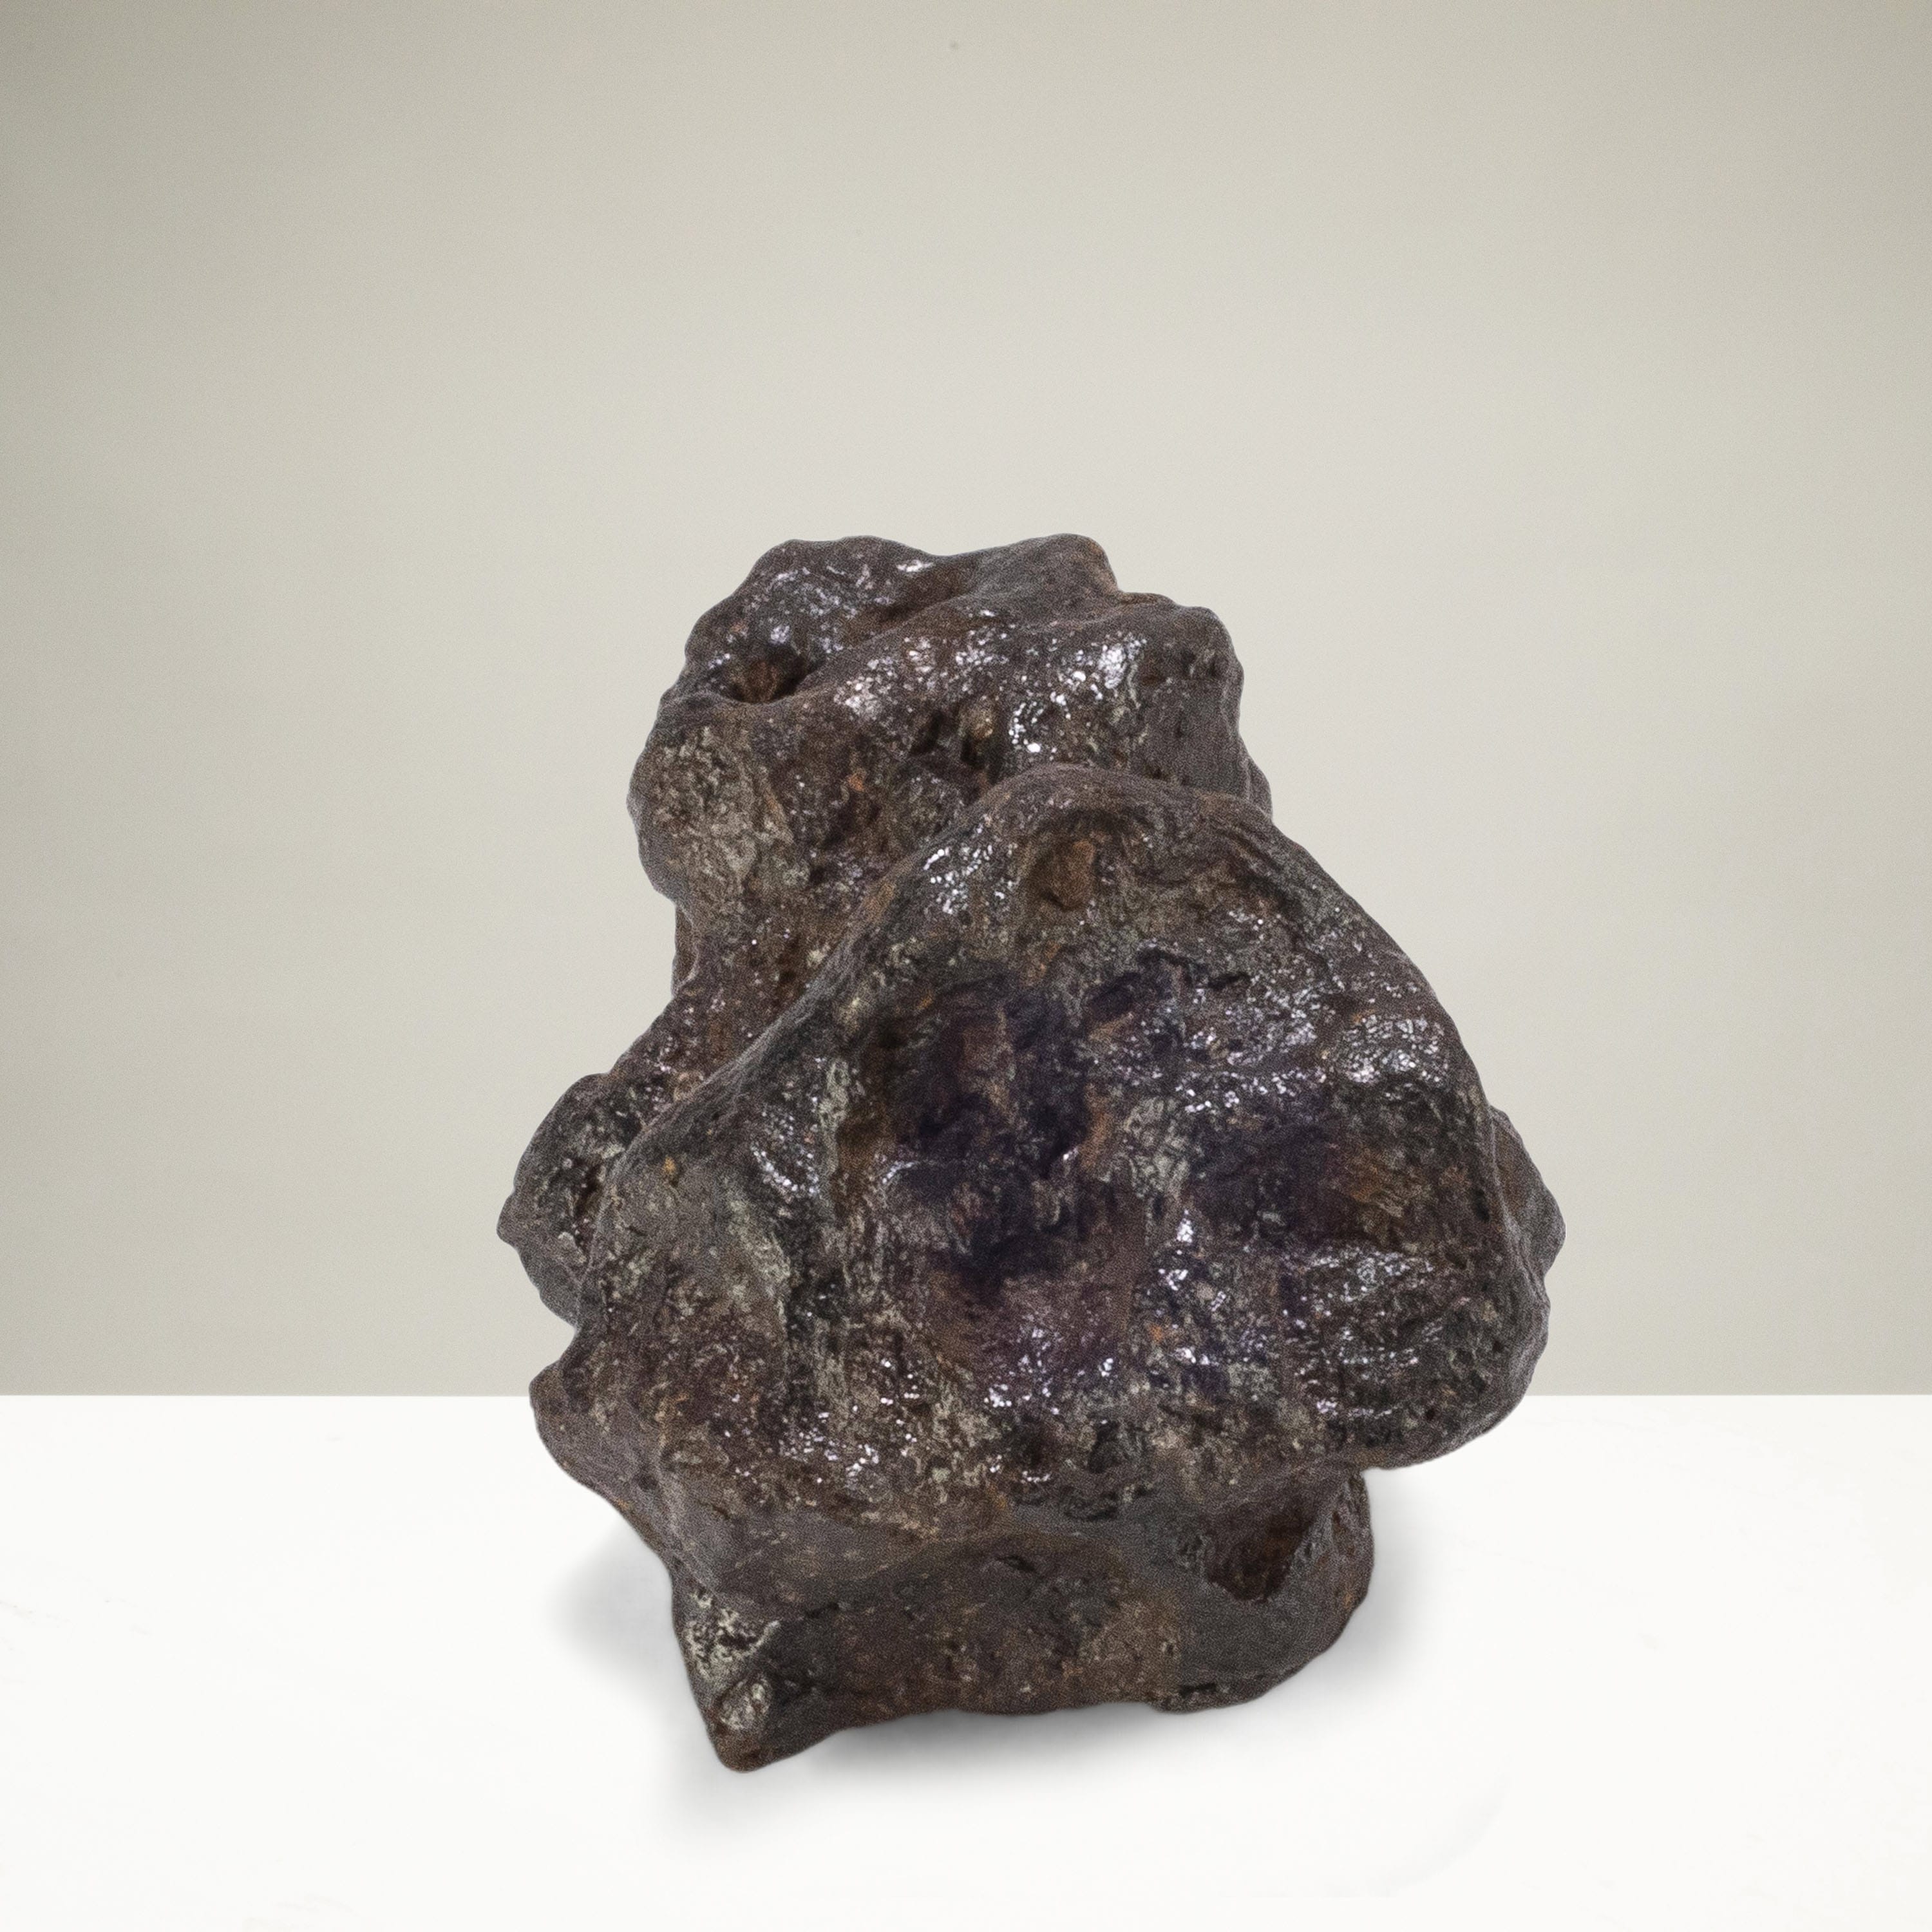 Kalifano Meteorites Sericho Iron Meteorite discovered in Kenya - 15 grams MTCHO300